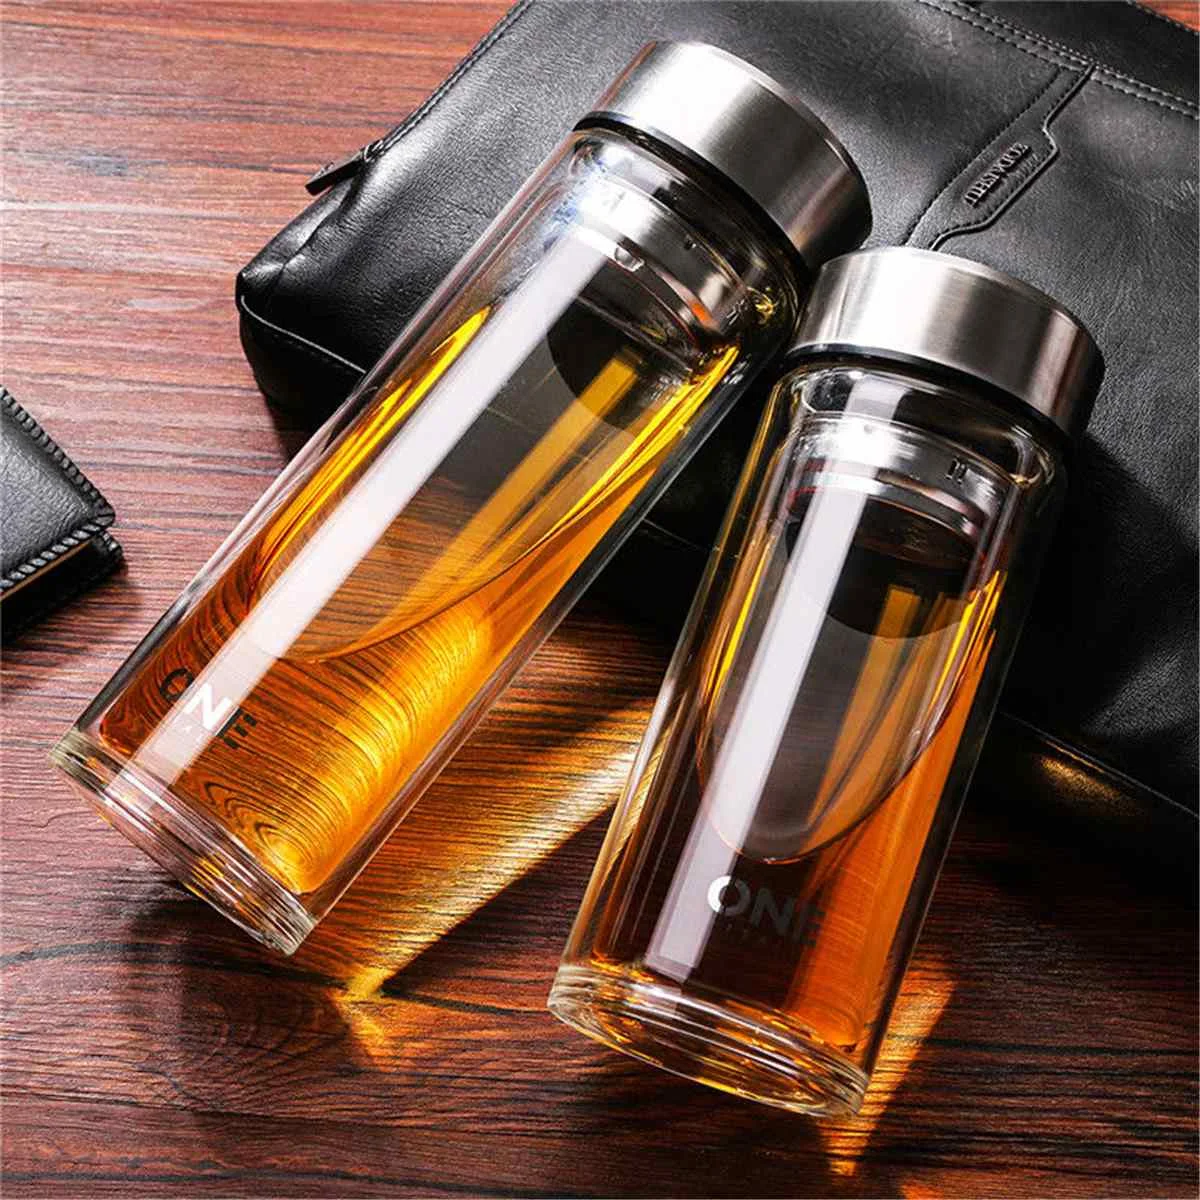 https://ae01.alicdn.com/kf/HLB1xnOxaOrxK1RkHFCcq6AQCVXaf/800ML-1000ML-Sport-Water-Bottles-Tea-Infusers-Glass-Water-Bottle-Portable-Leakproof-Drinkware-Vacuum-Tea-Coffee.jpg